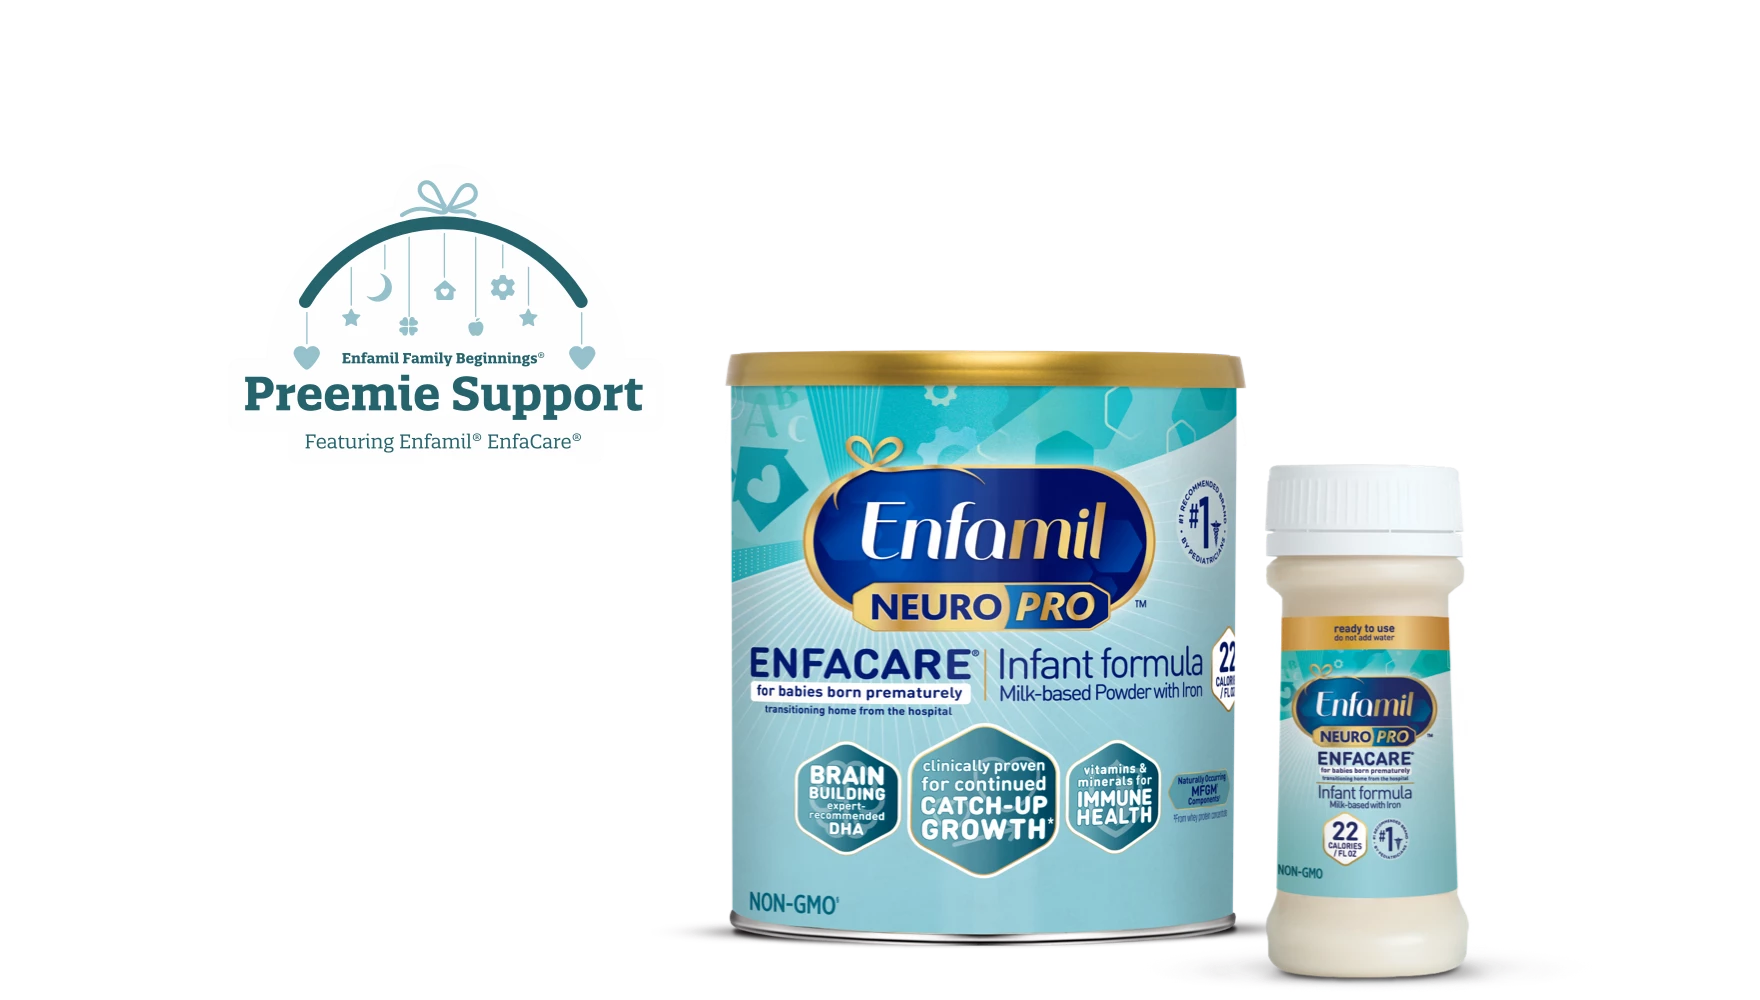 Enfamil NeuroPro EnfaCare Infant Formula and 2 oz nursette